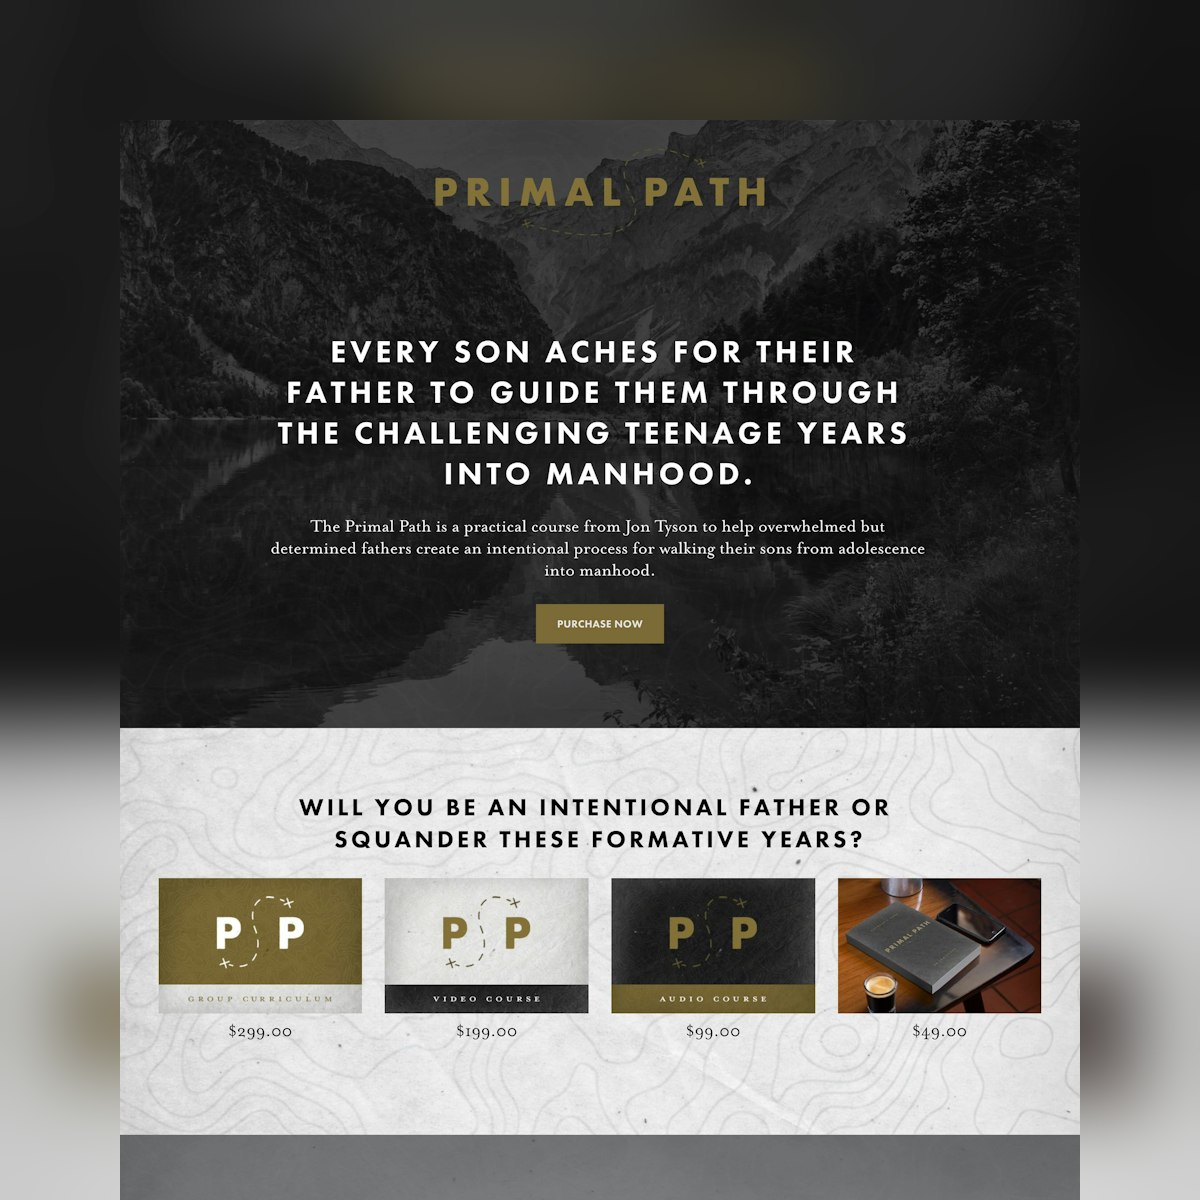 Product Page screen design idea #368: Website Inspiration: Primal Path